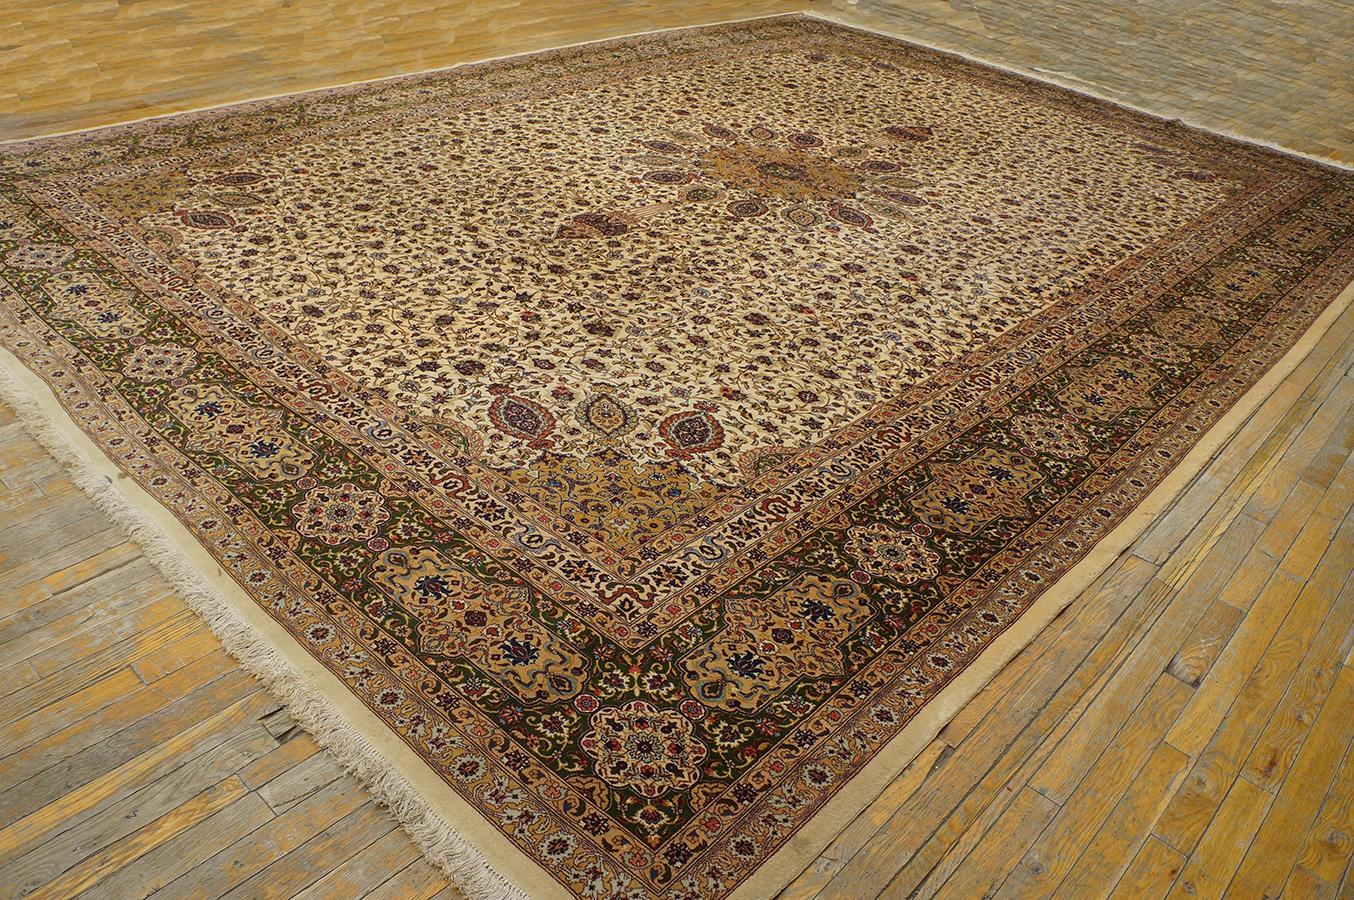 Antique Persian Tabriz rug, size: 11' 7'' x 15' 7''.